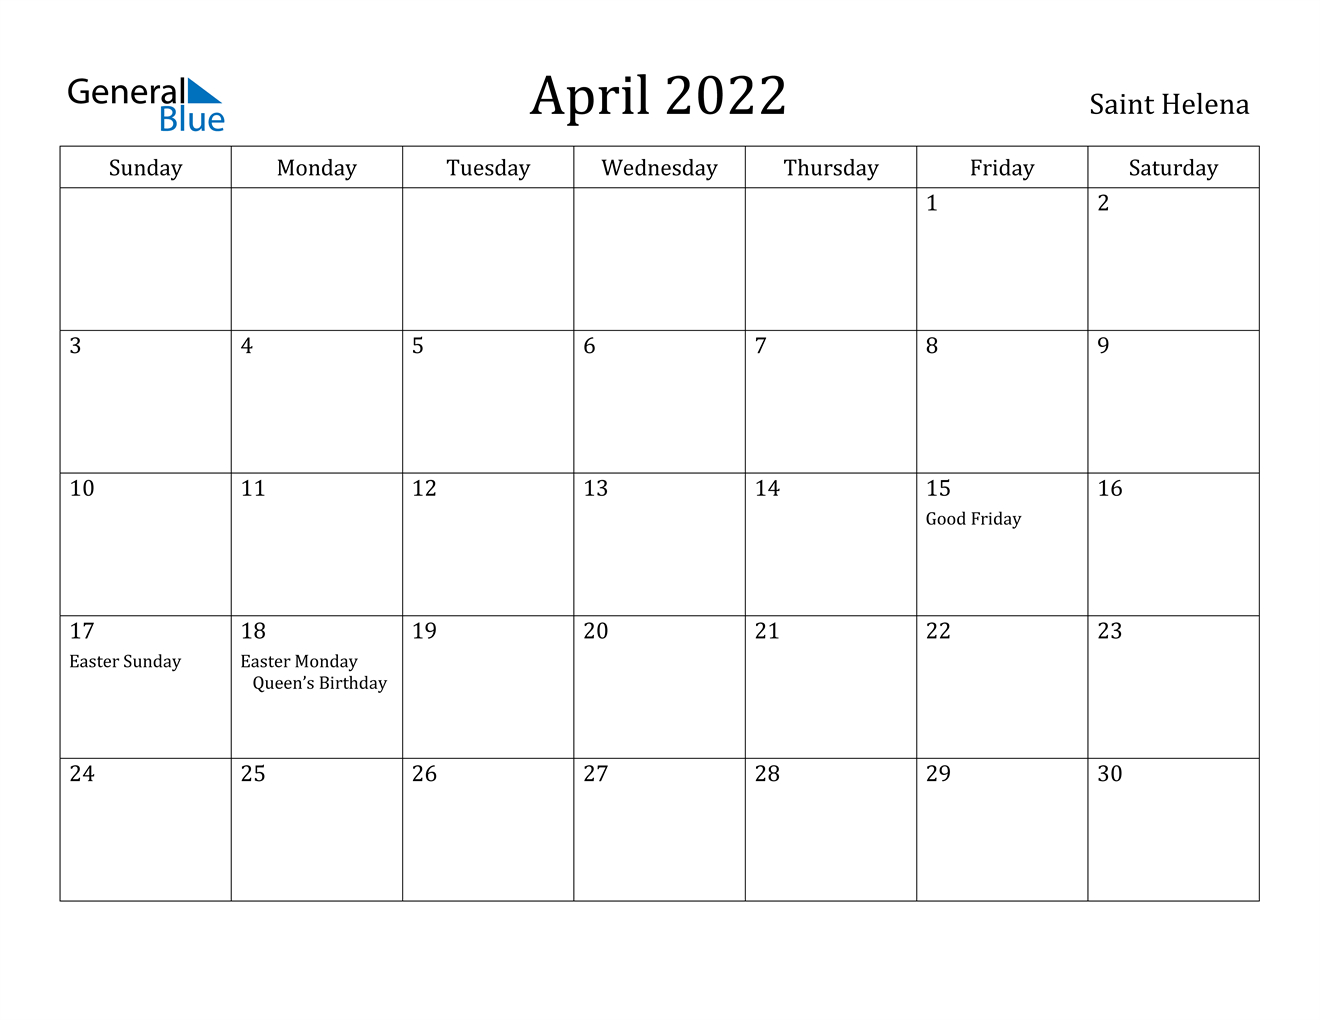 April 2022 Calendar - Saint Helena